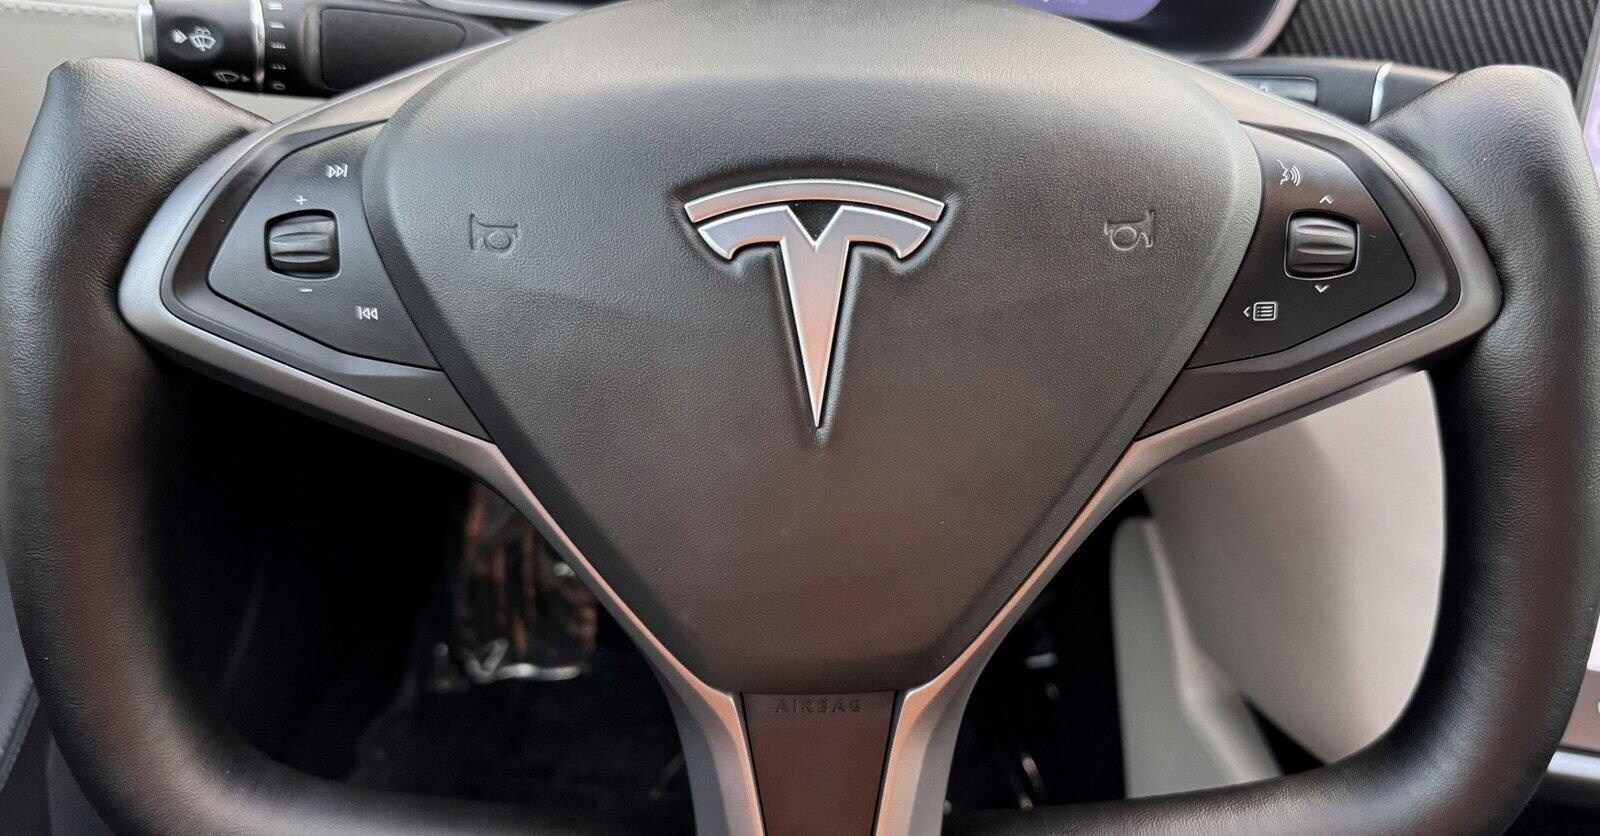 Used 2020 Tesla Model S For Sale at AutoNation Toyota Arapahoe 